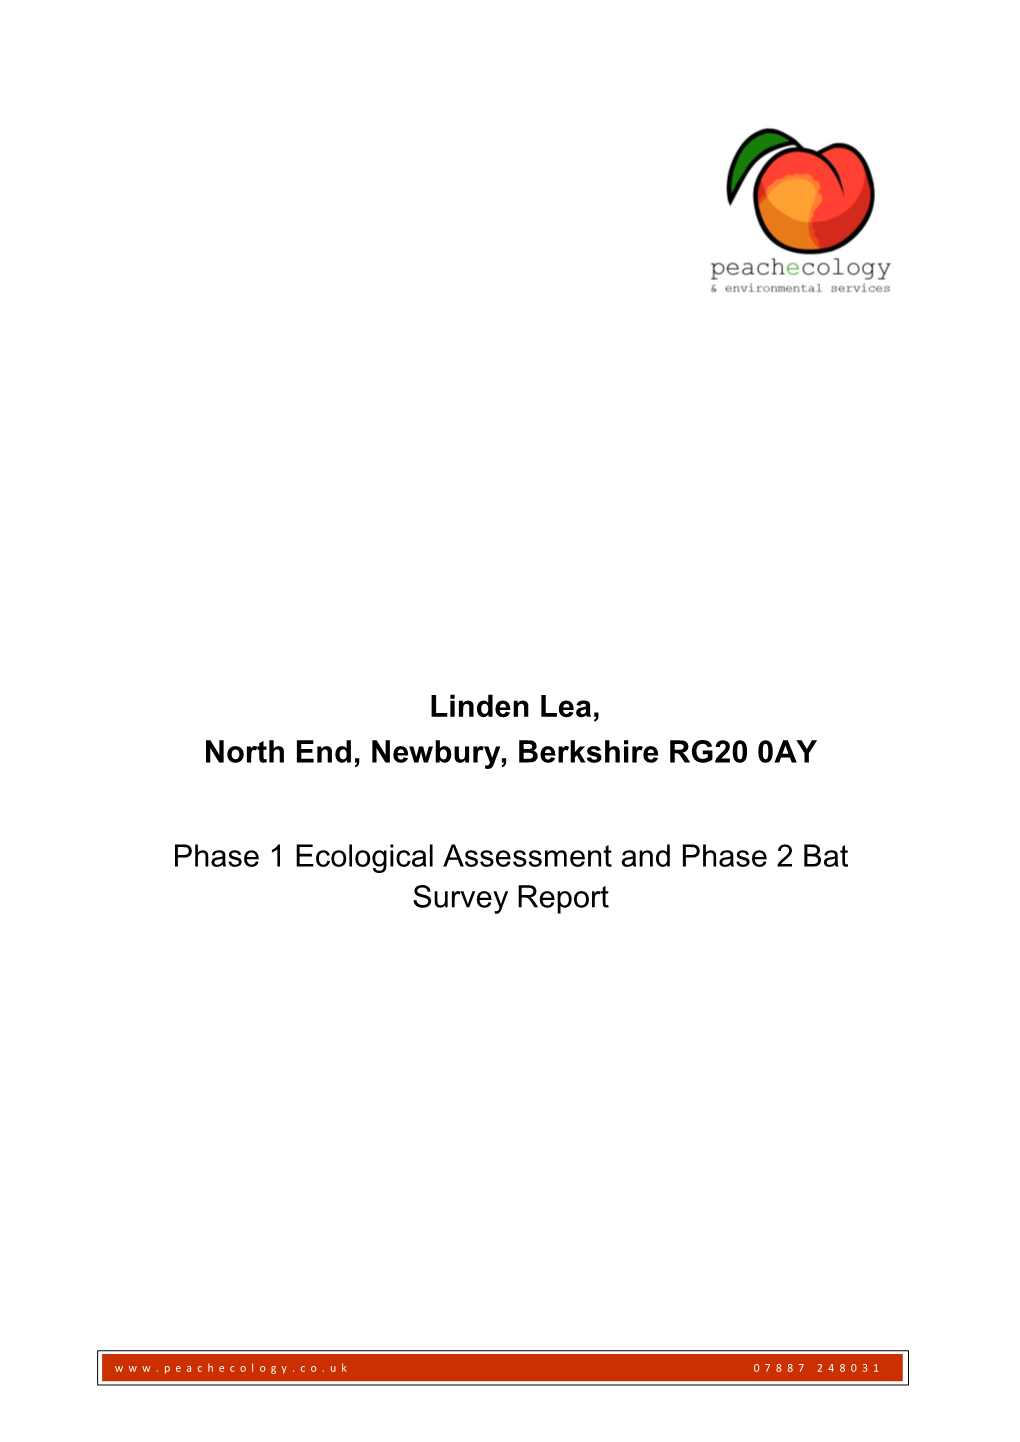 Linden Lea, North End, Newbury, Berkshire RG20 0AY Phase 1